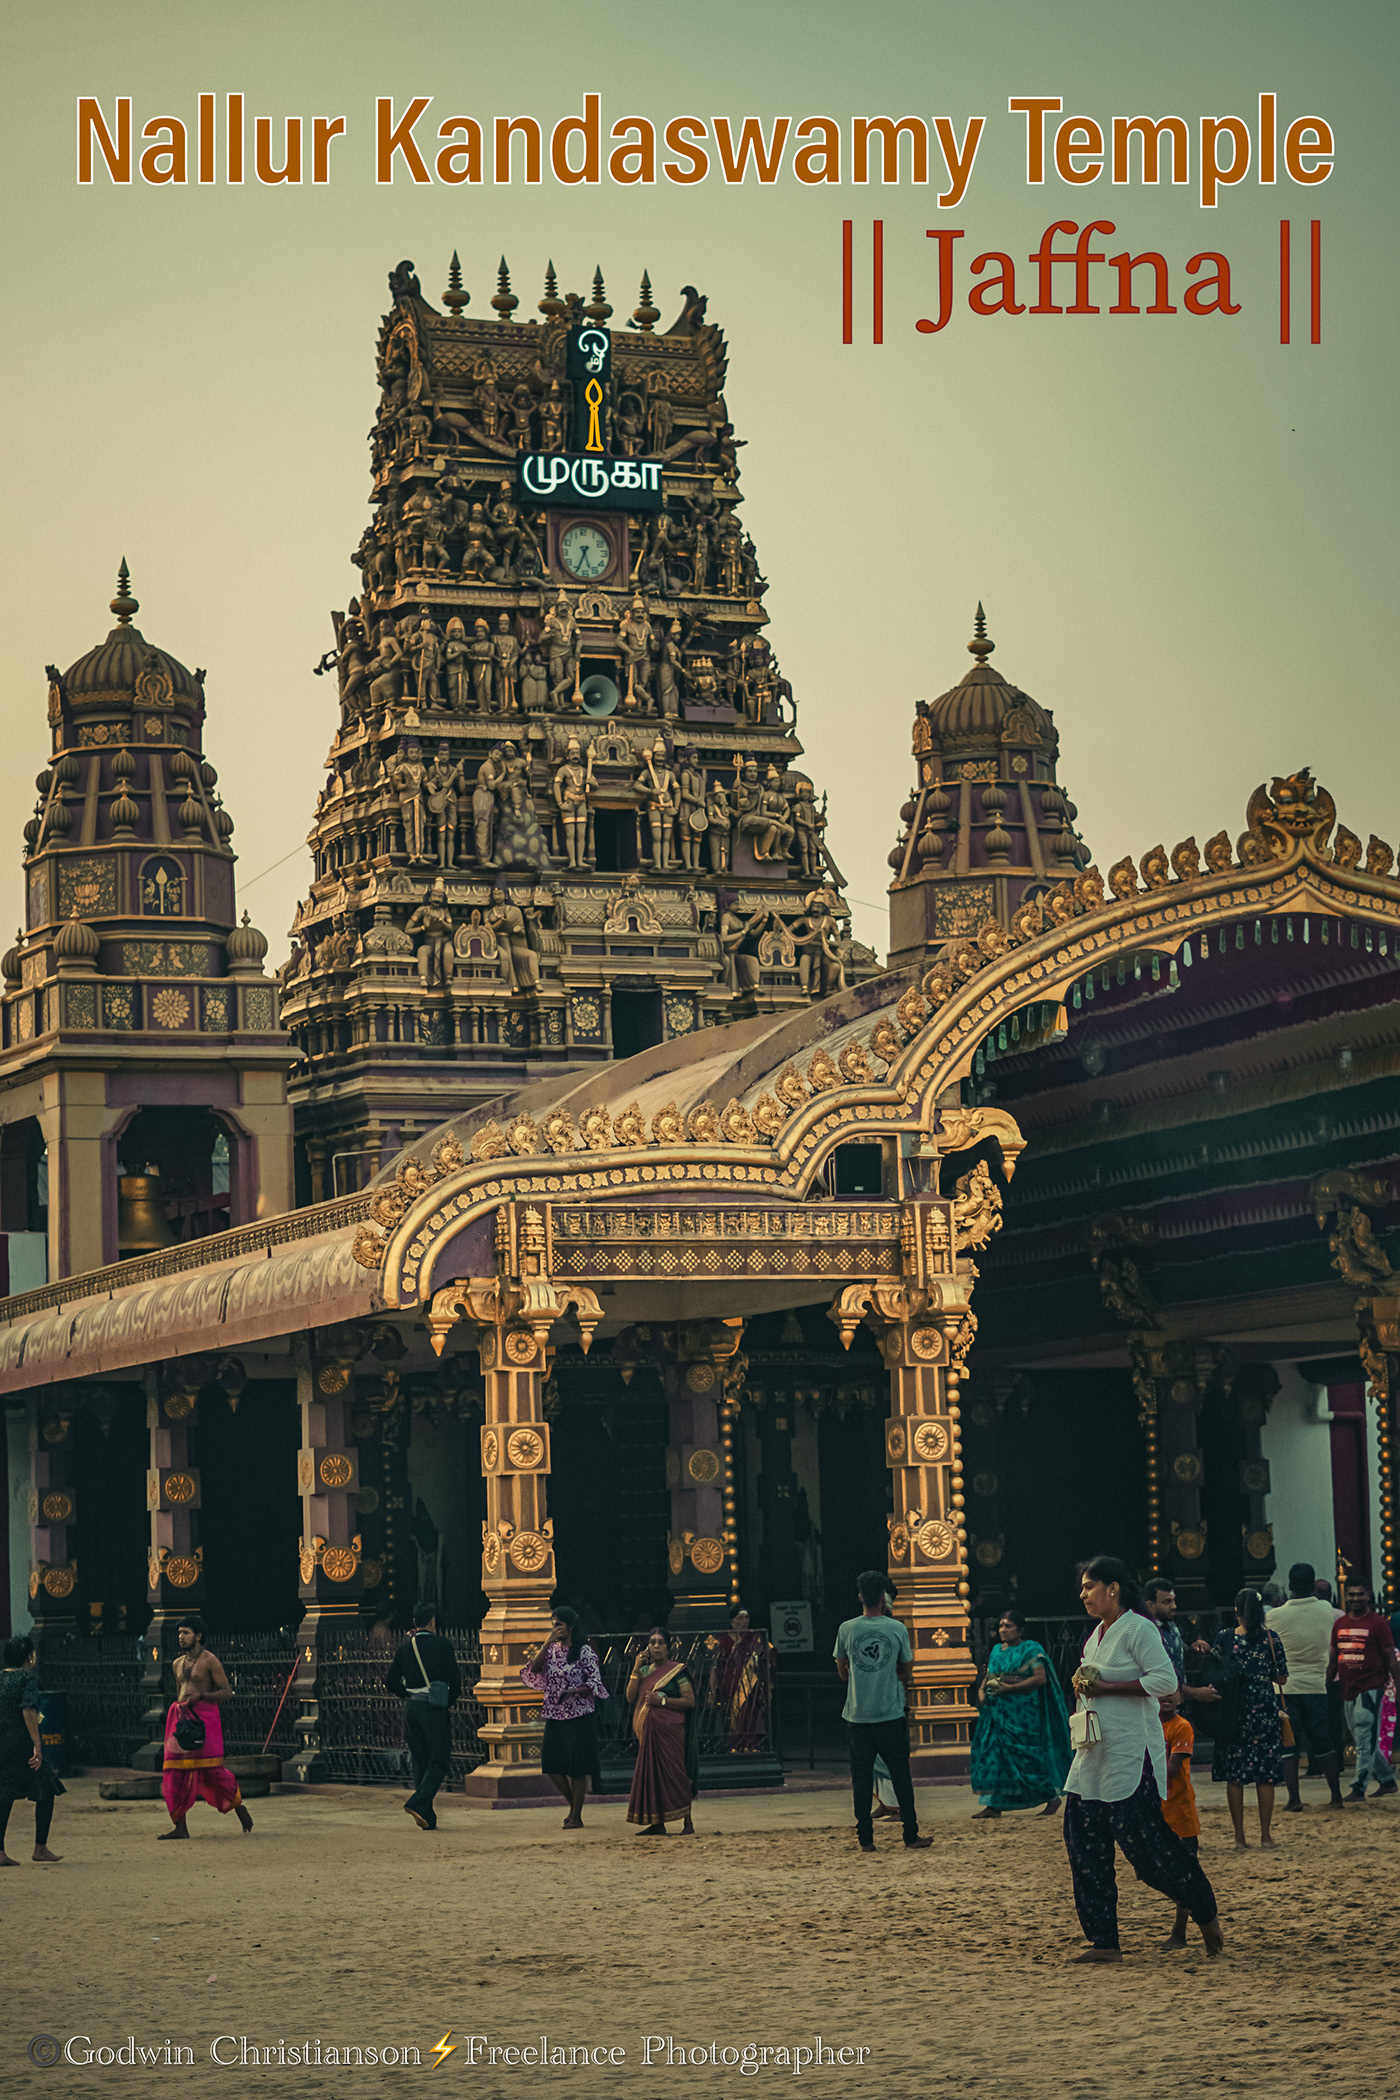 jaffna tamil culture history Hindu temple Photography  architectural kovil Nallur